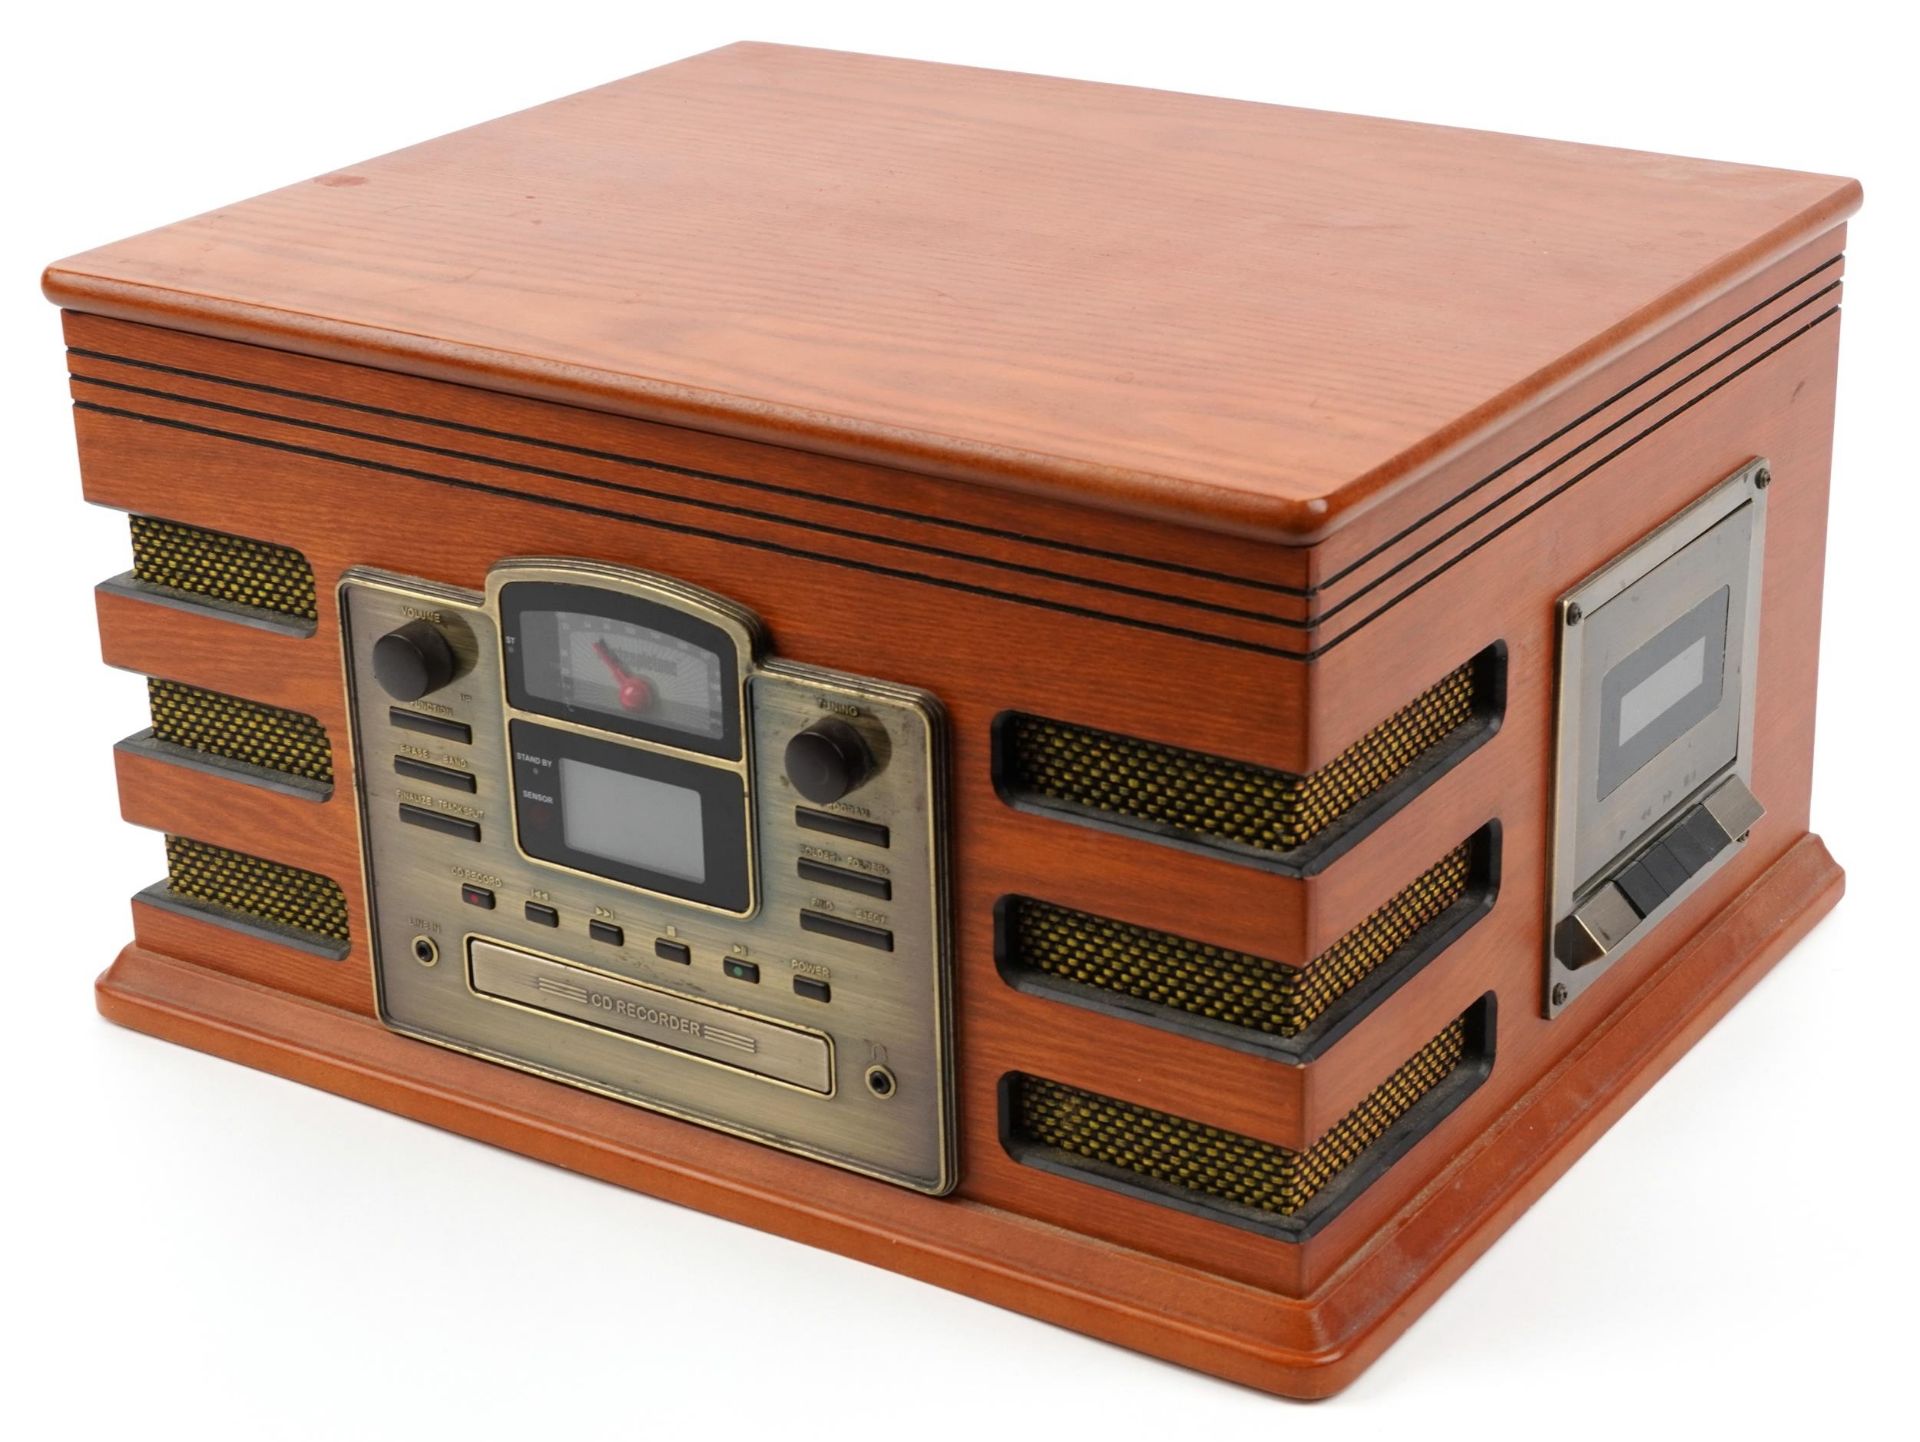 Retro Steepletone lightwood record/CD player and radio, 26cm H x 45cm W x 37cm D : For further - Image 2 of 3